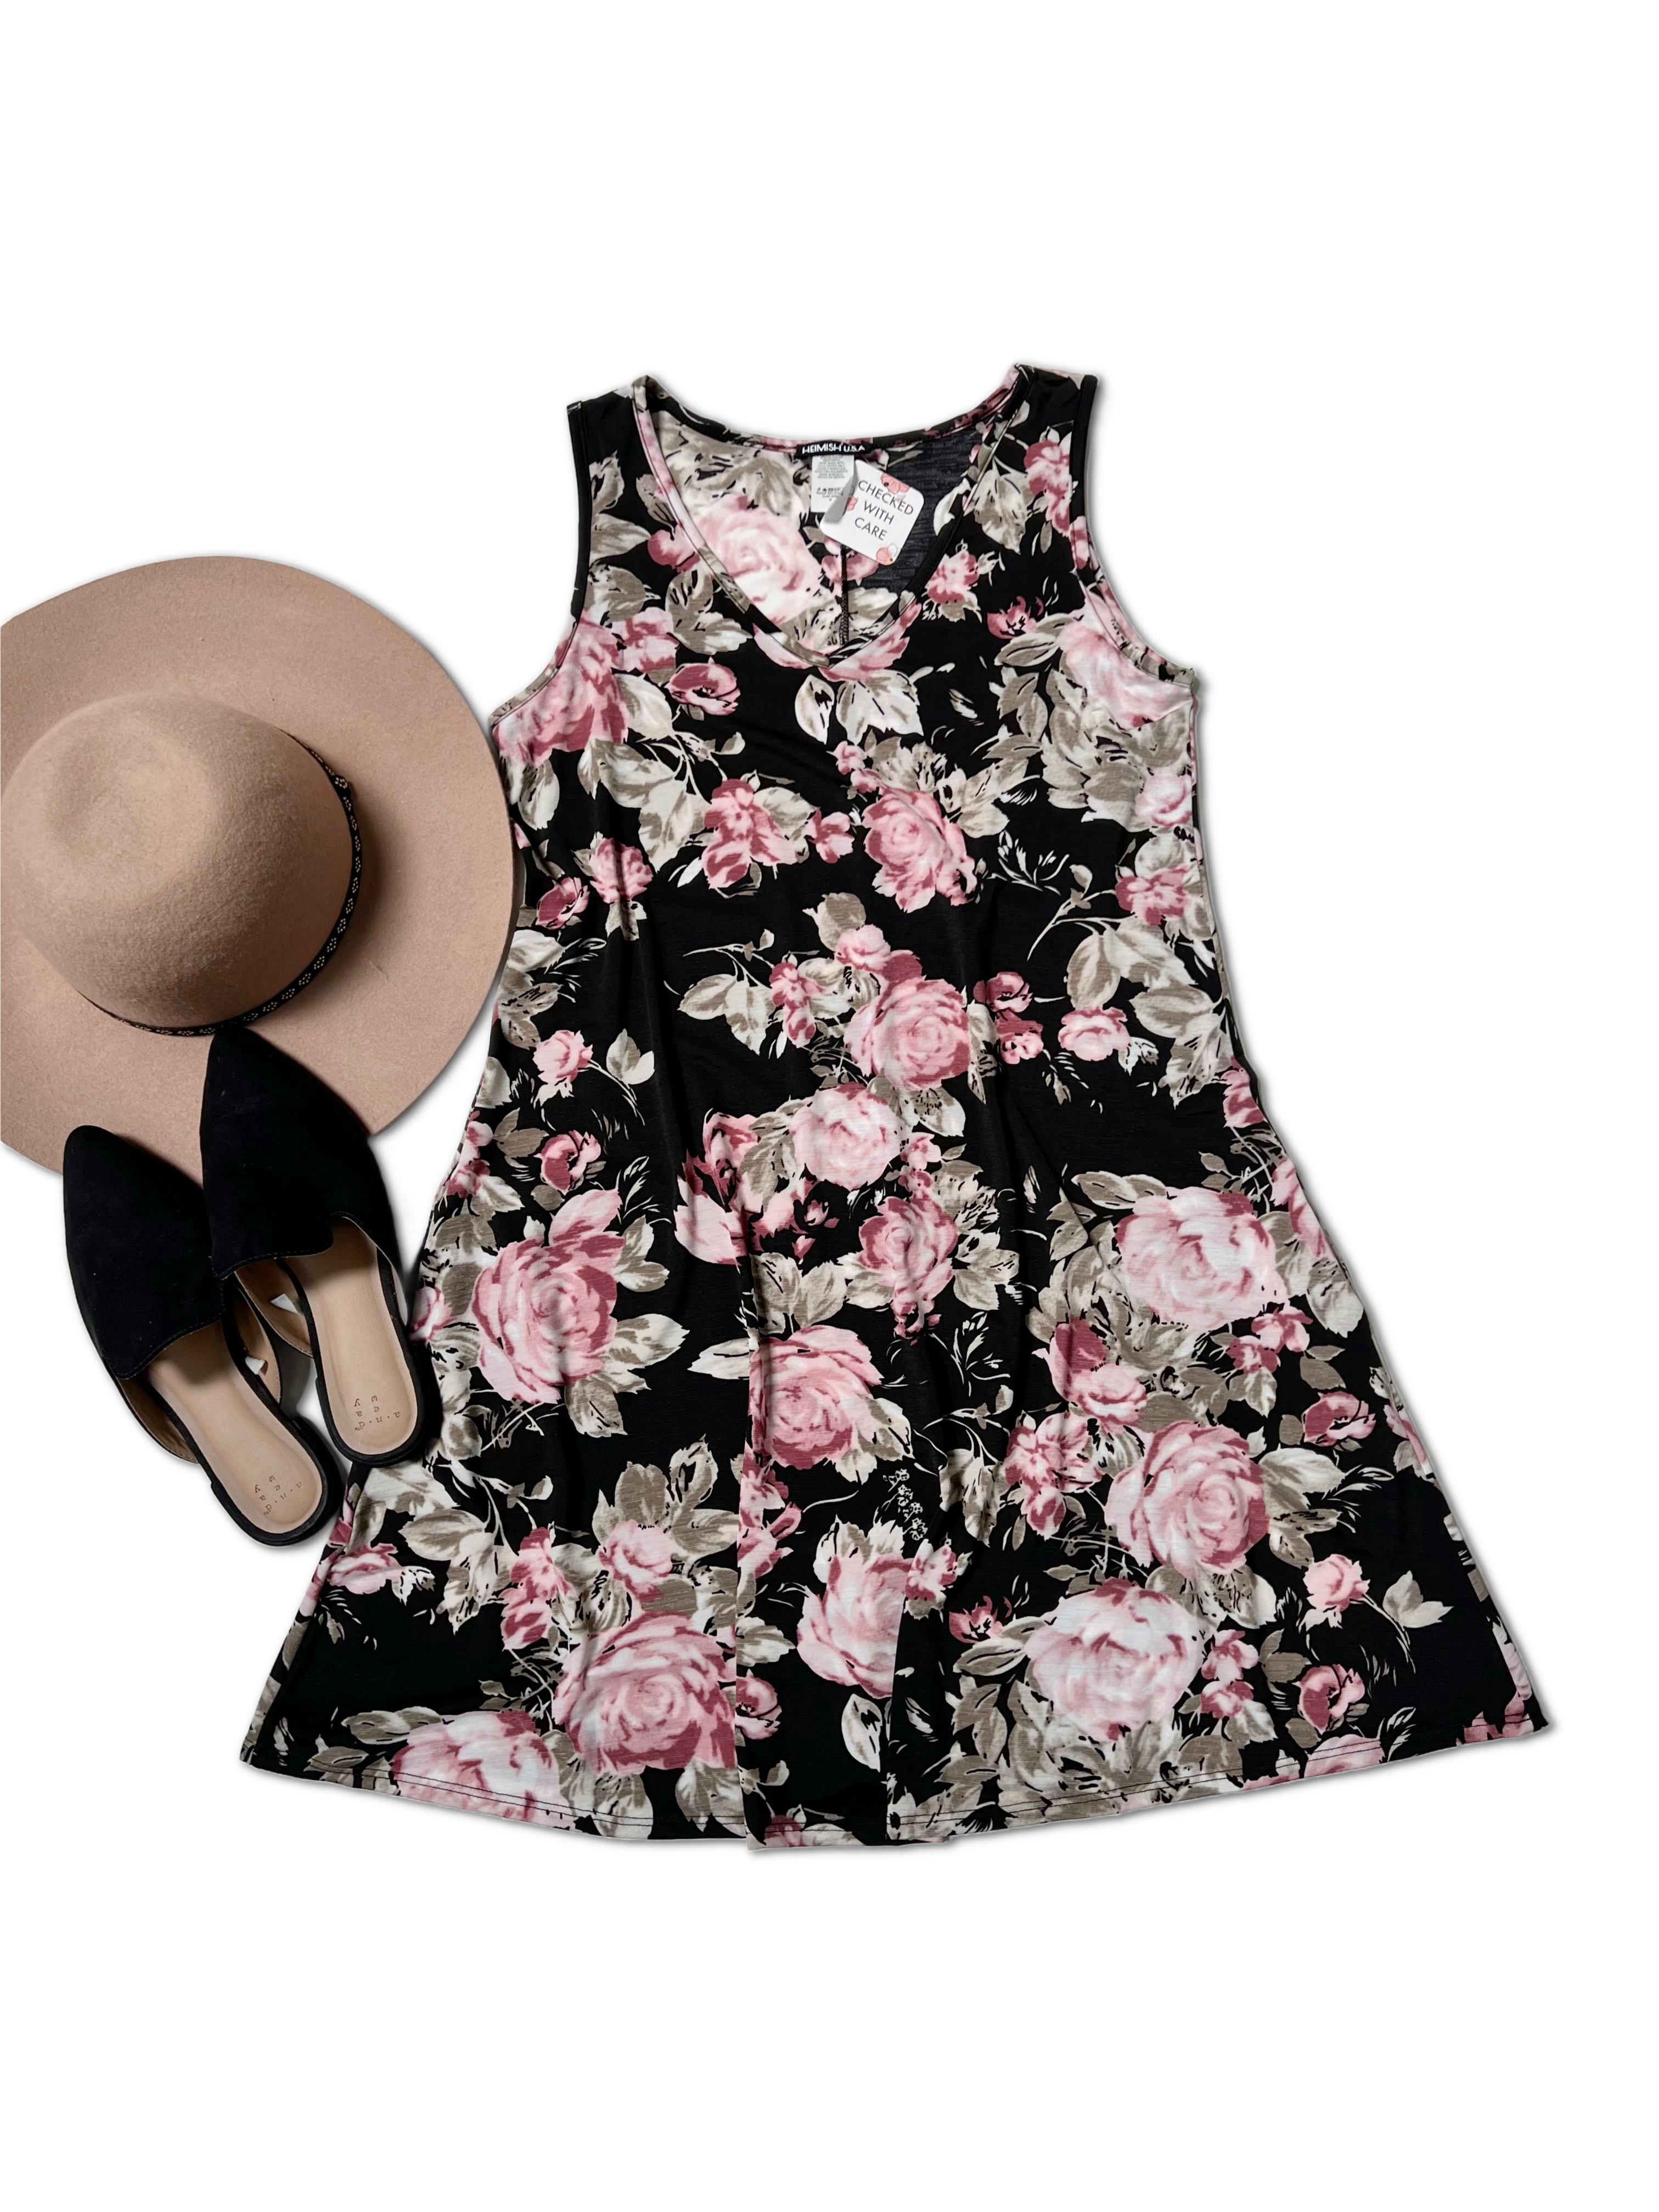 Vintage Rose Swing Dress Boutique Simplified